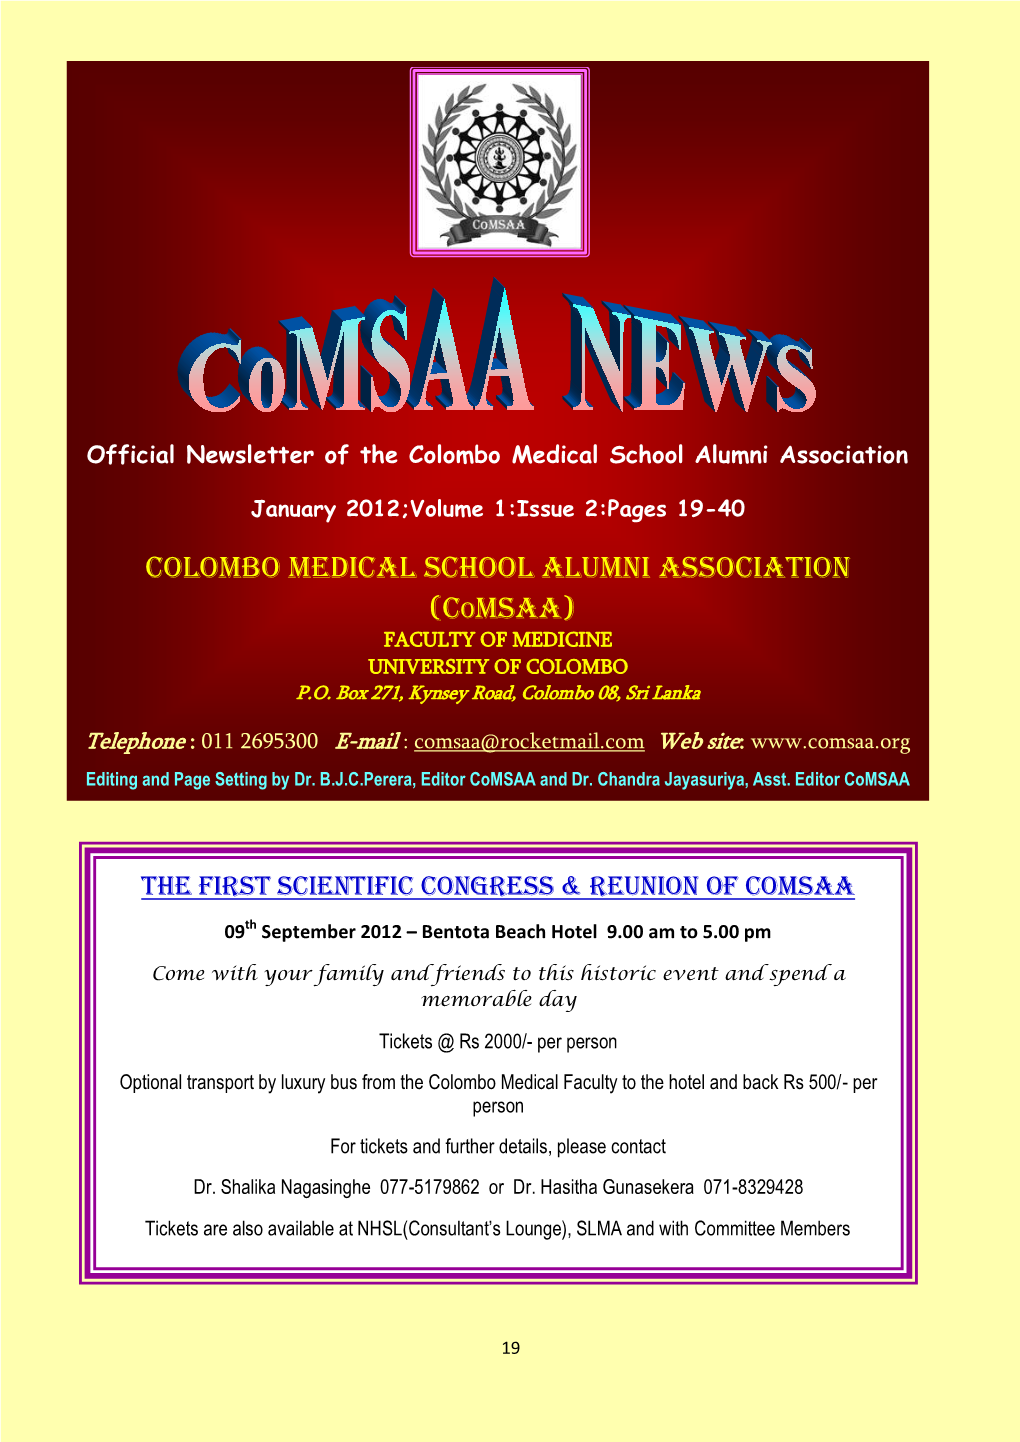 COLOMBO MEDICAL SCHOOL ALUMNI Association (Comsaa) FACULTY of MEDICINE UNIVERSITY of COLOMBO P.O